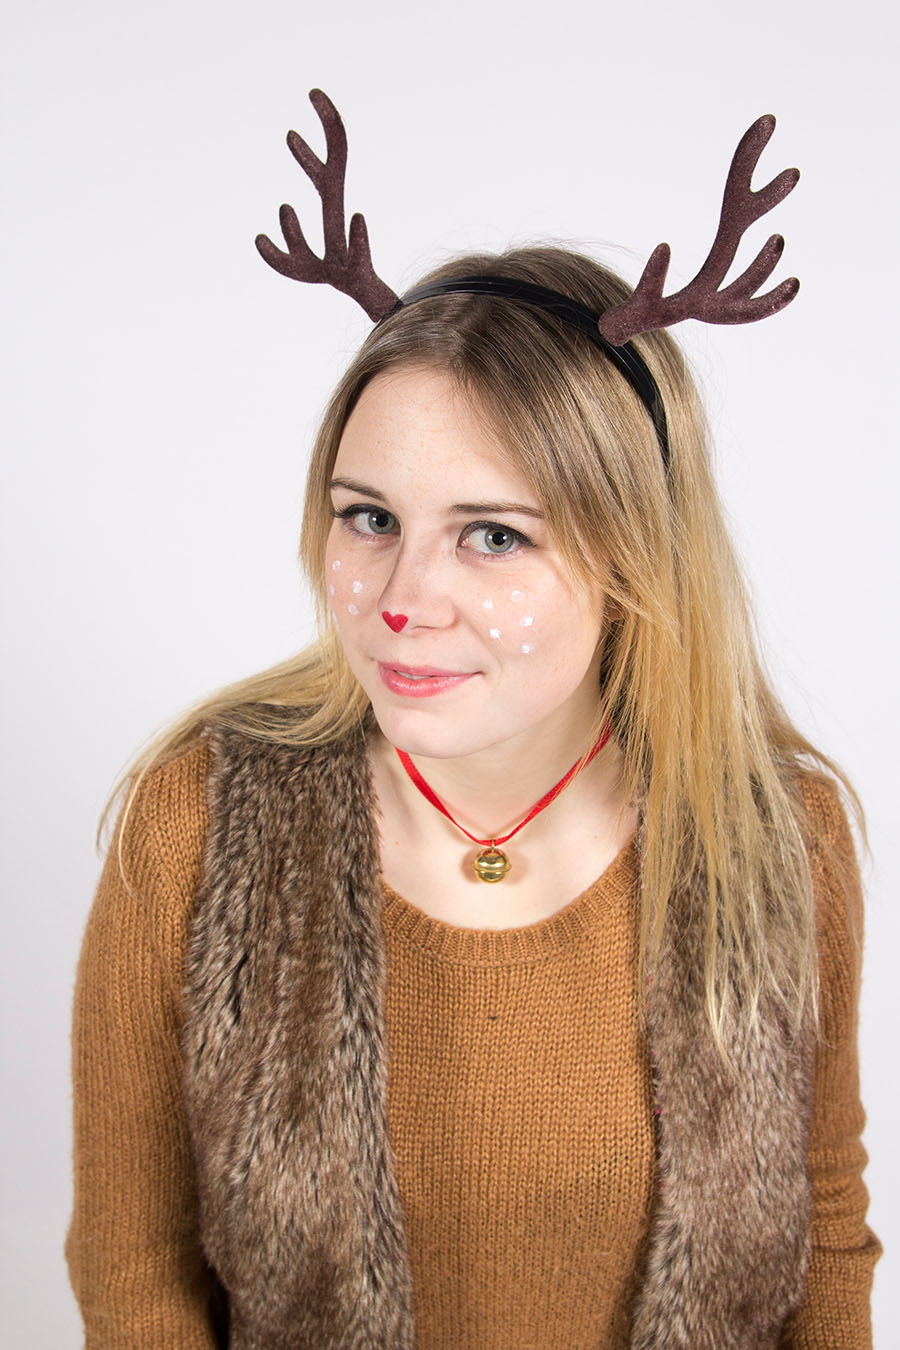 reindeer1